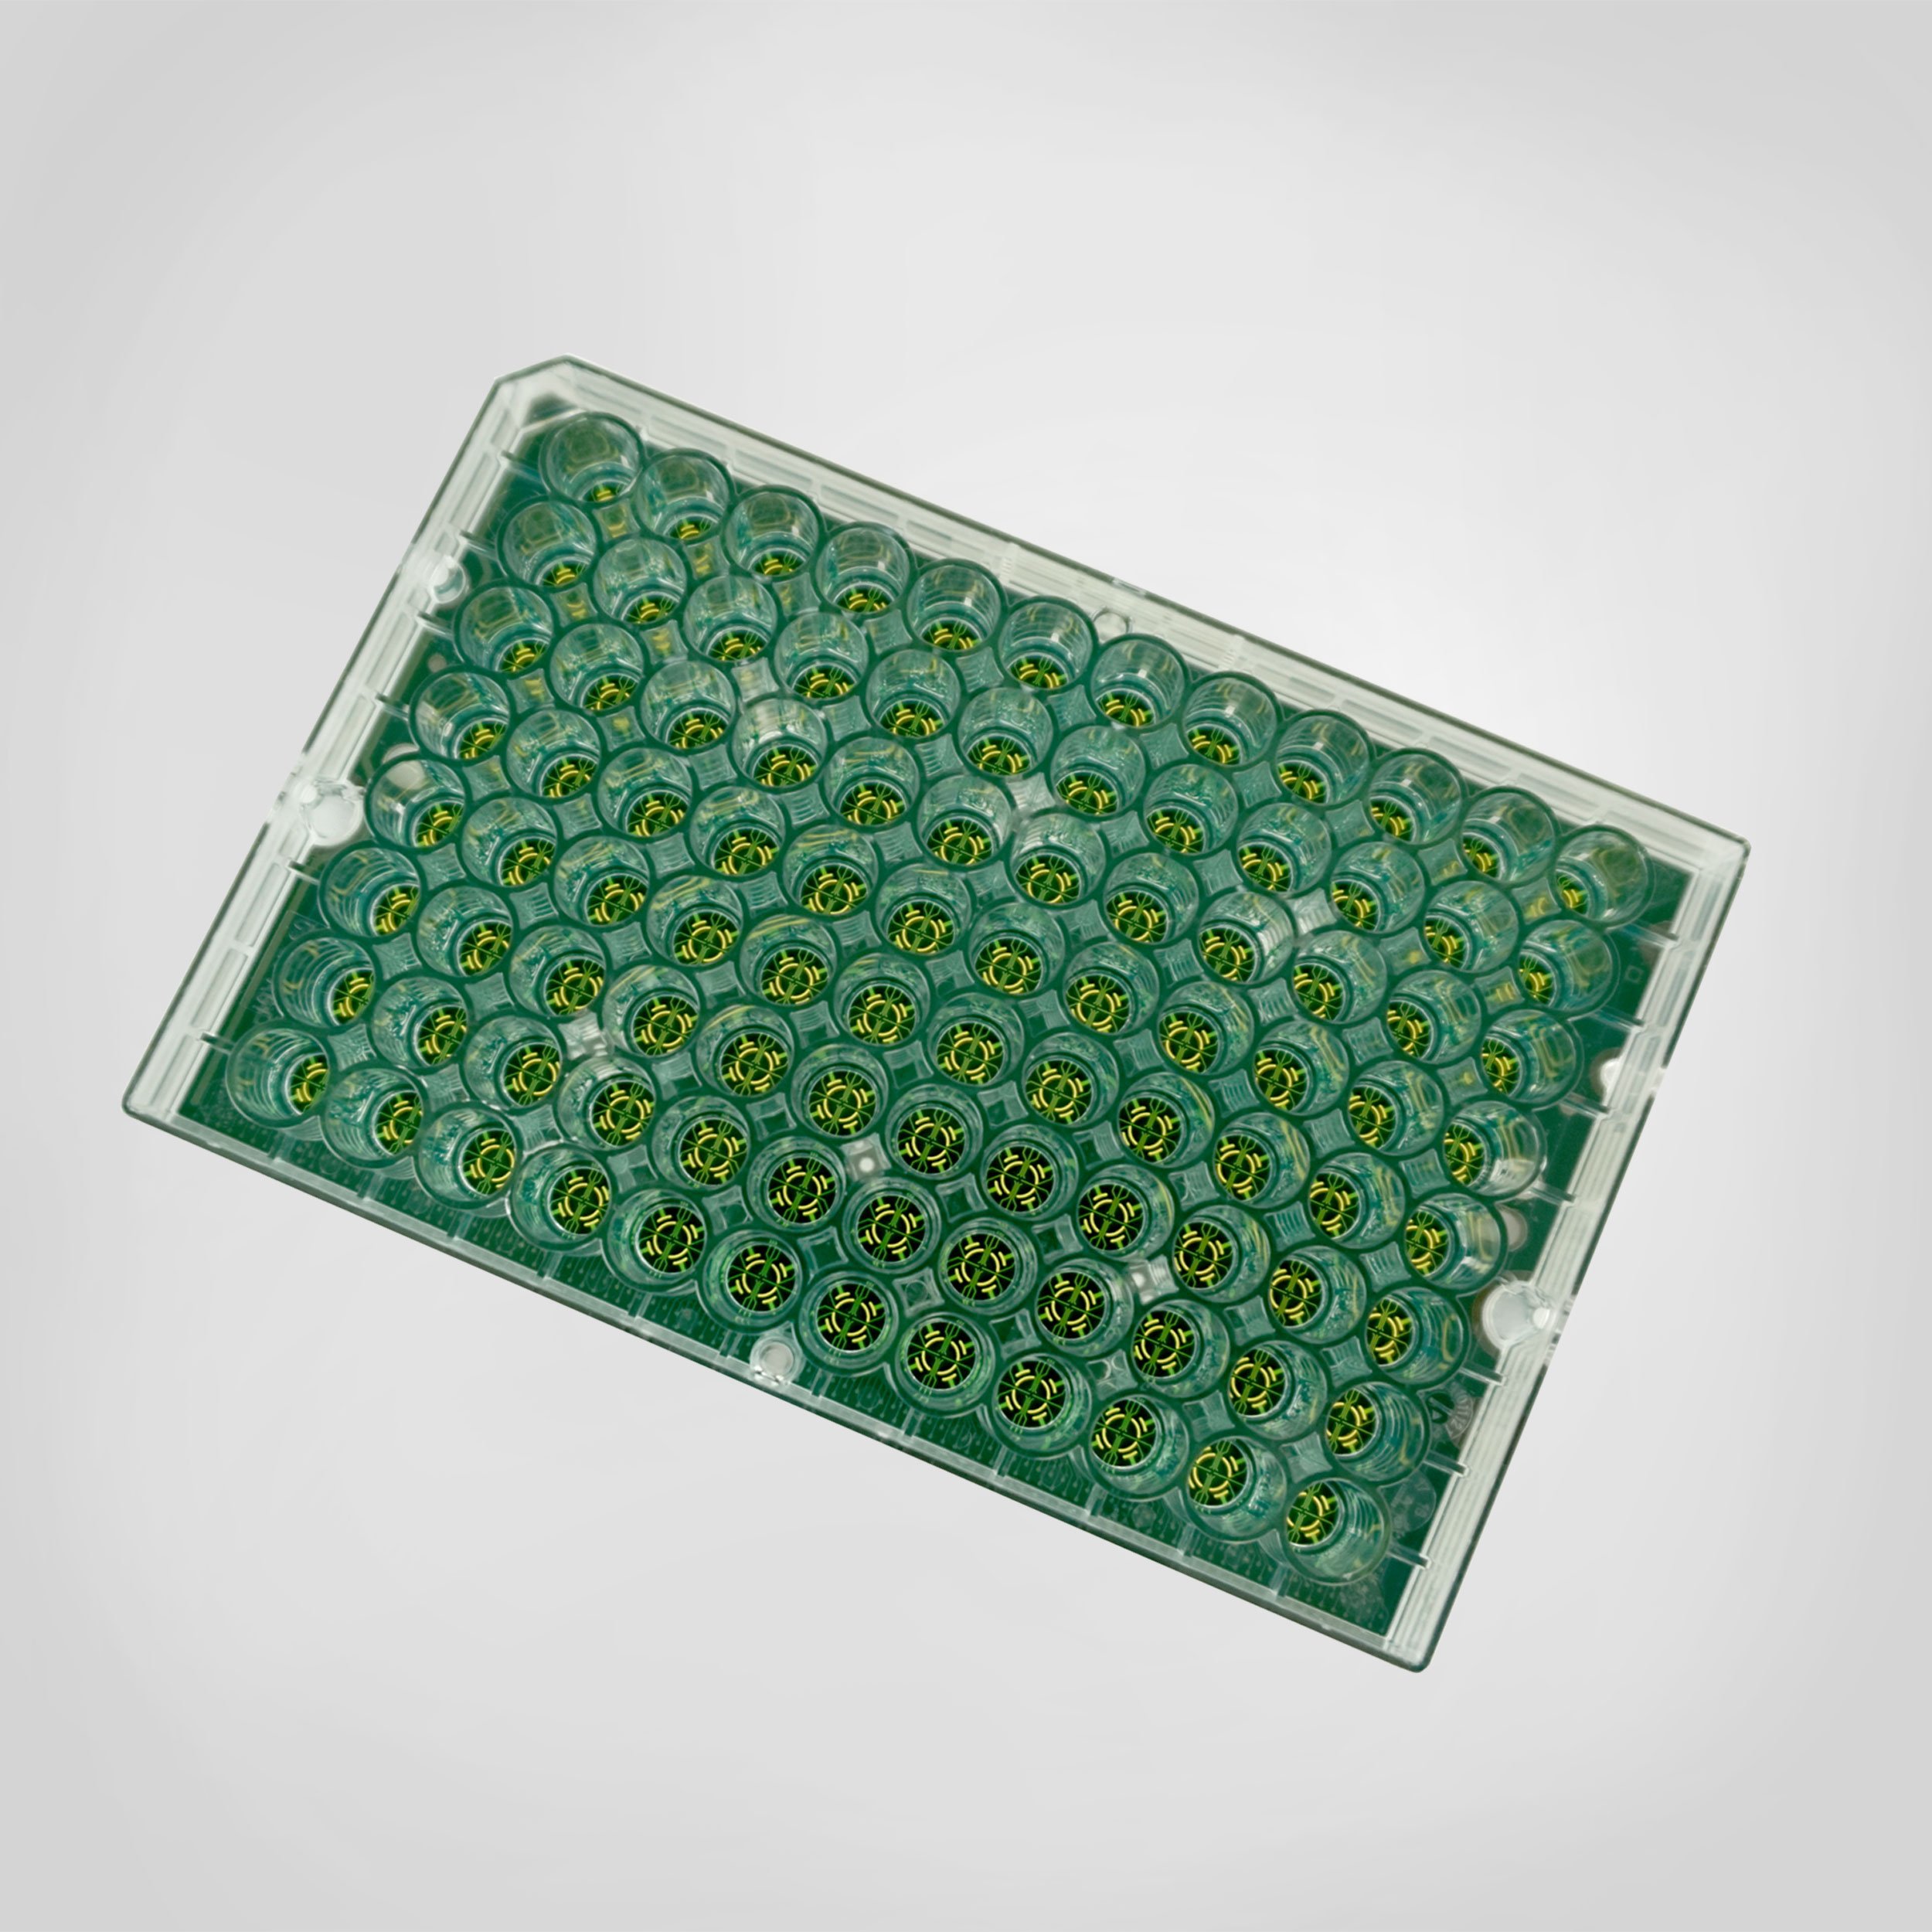 BioCircuit 96 well microelectrode array MEA plate